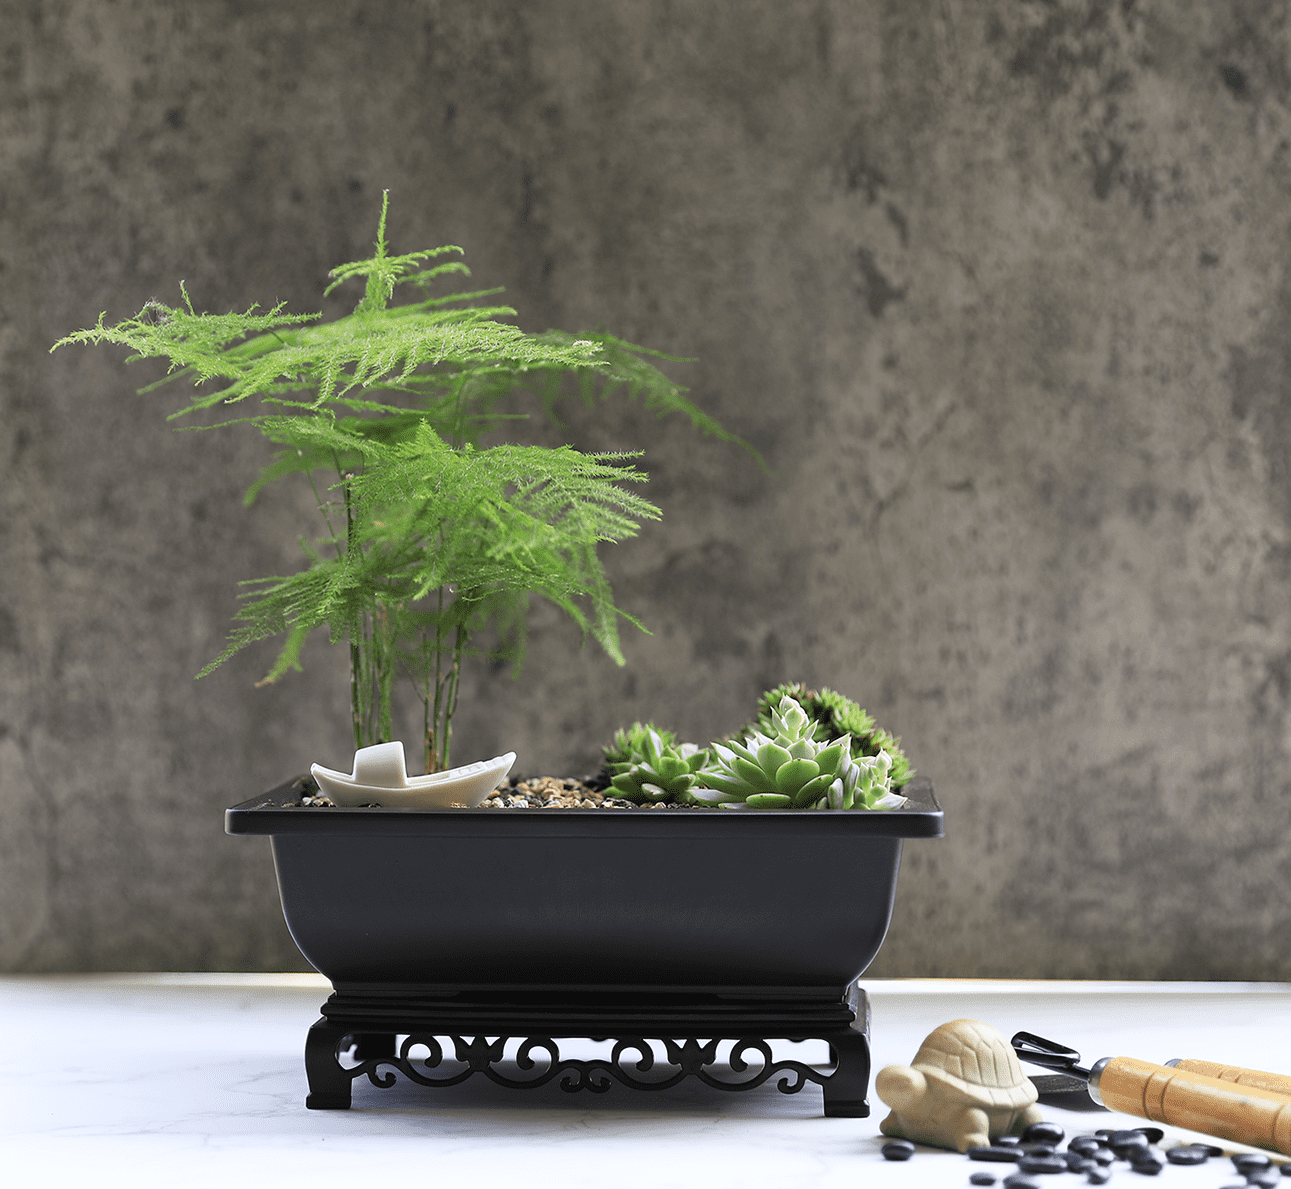 Bonsai Pot with Stand 7.5 Inch Small Bonsai Tree Training Pot Mesh Dra –  Cotta Planters